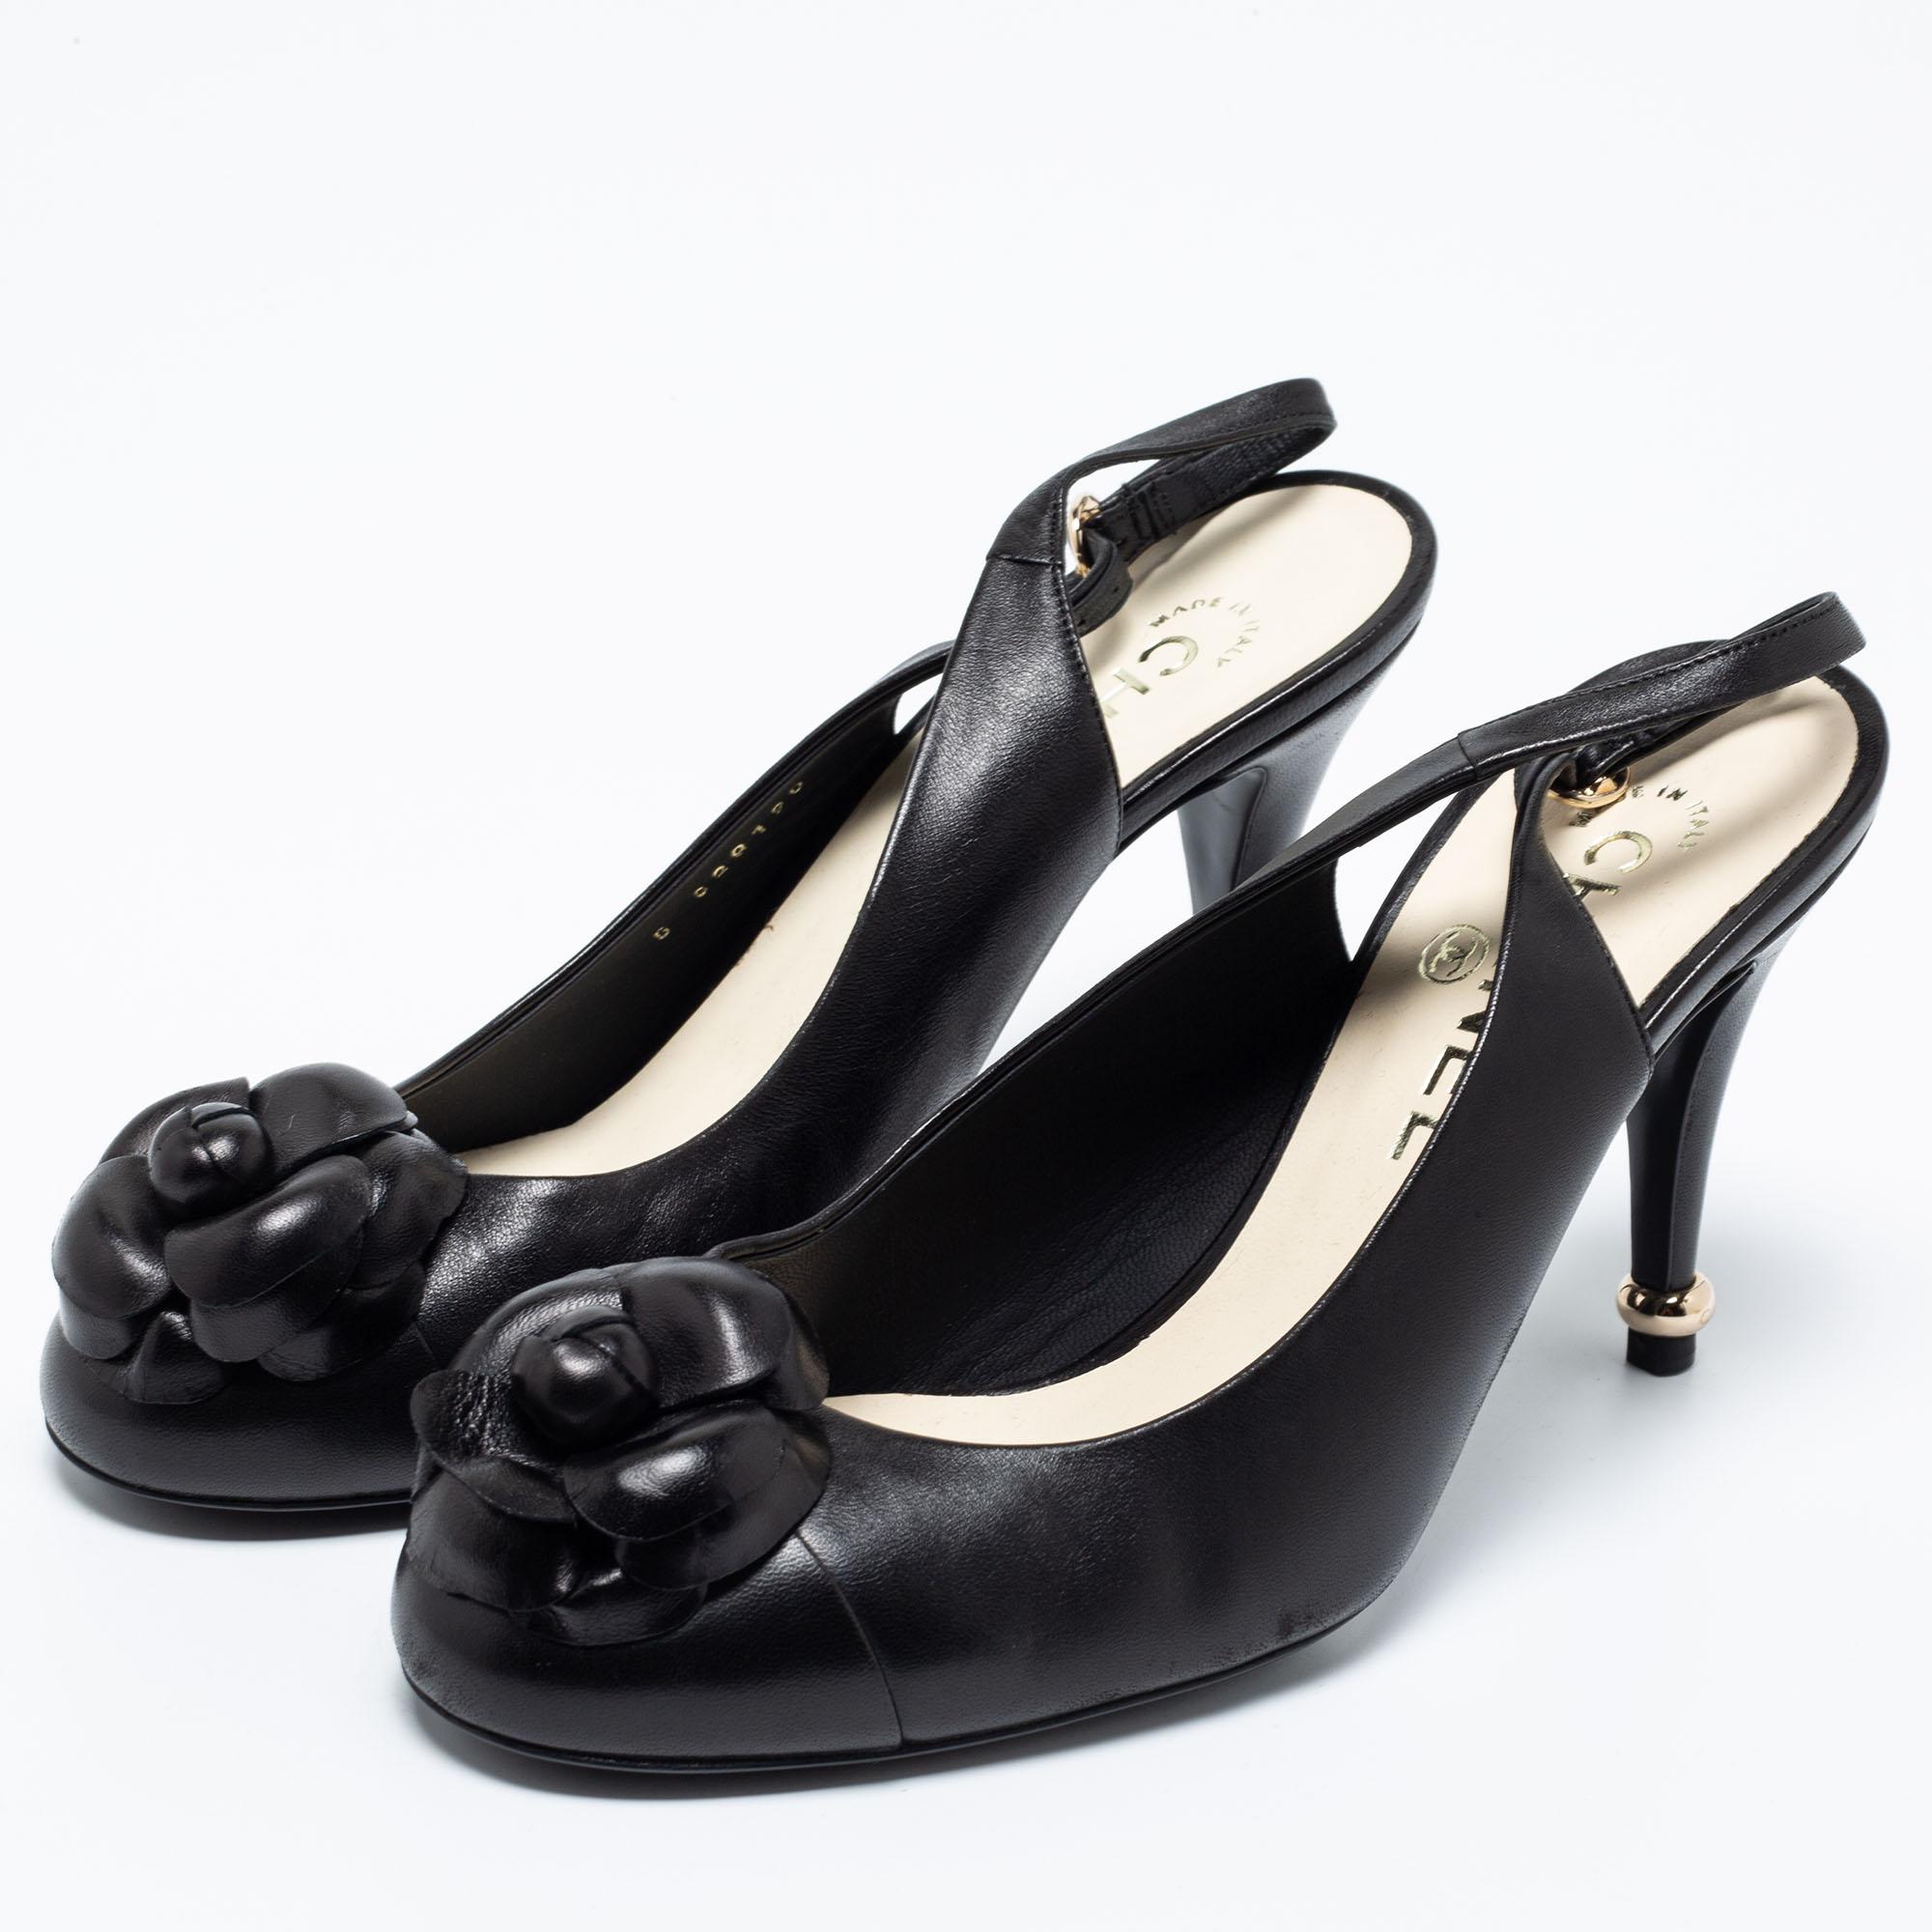 Women's Chanel Black Leather Camellia Slingback Sandals Size 38